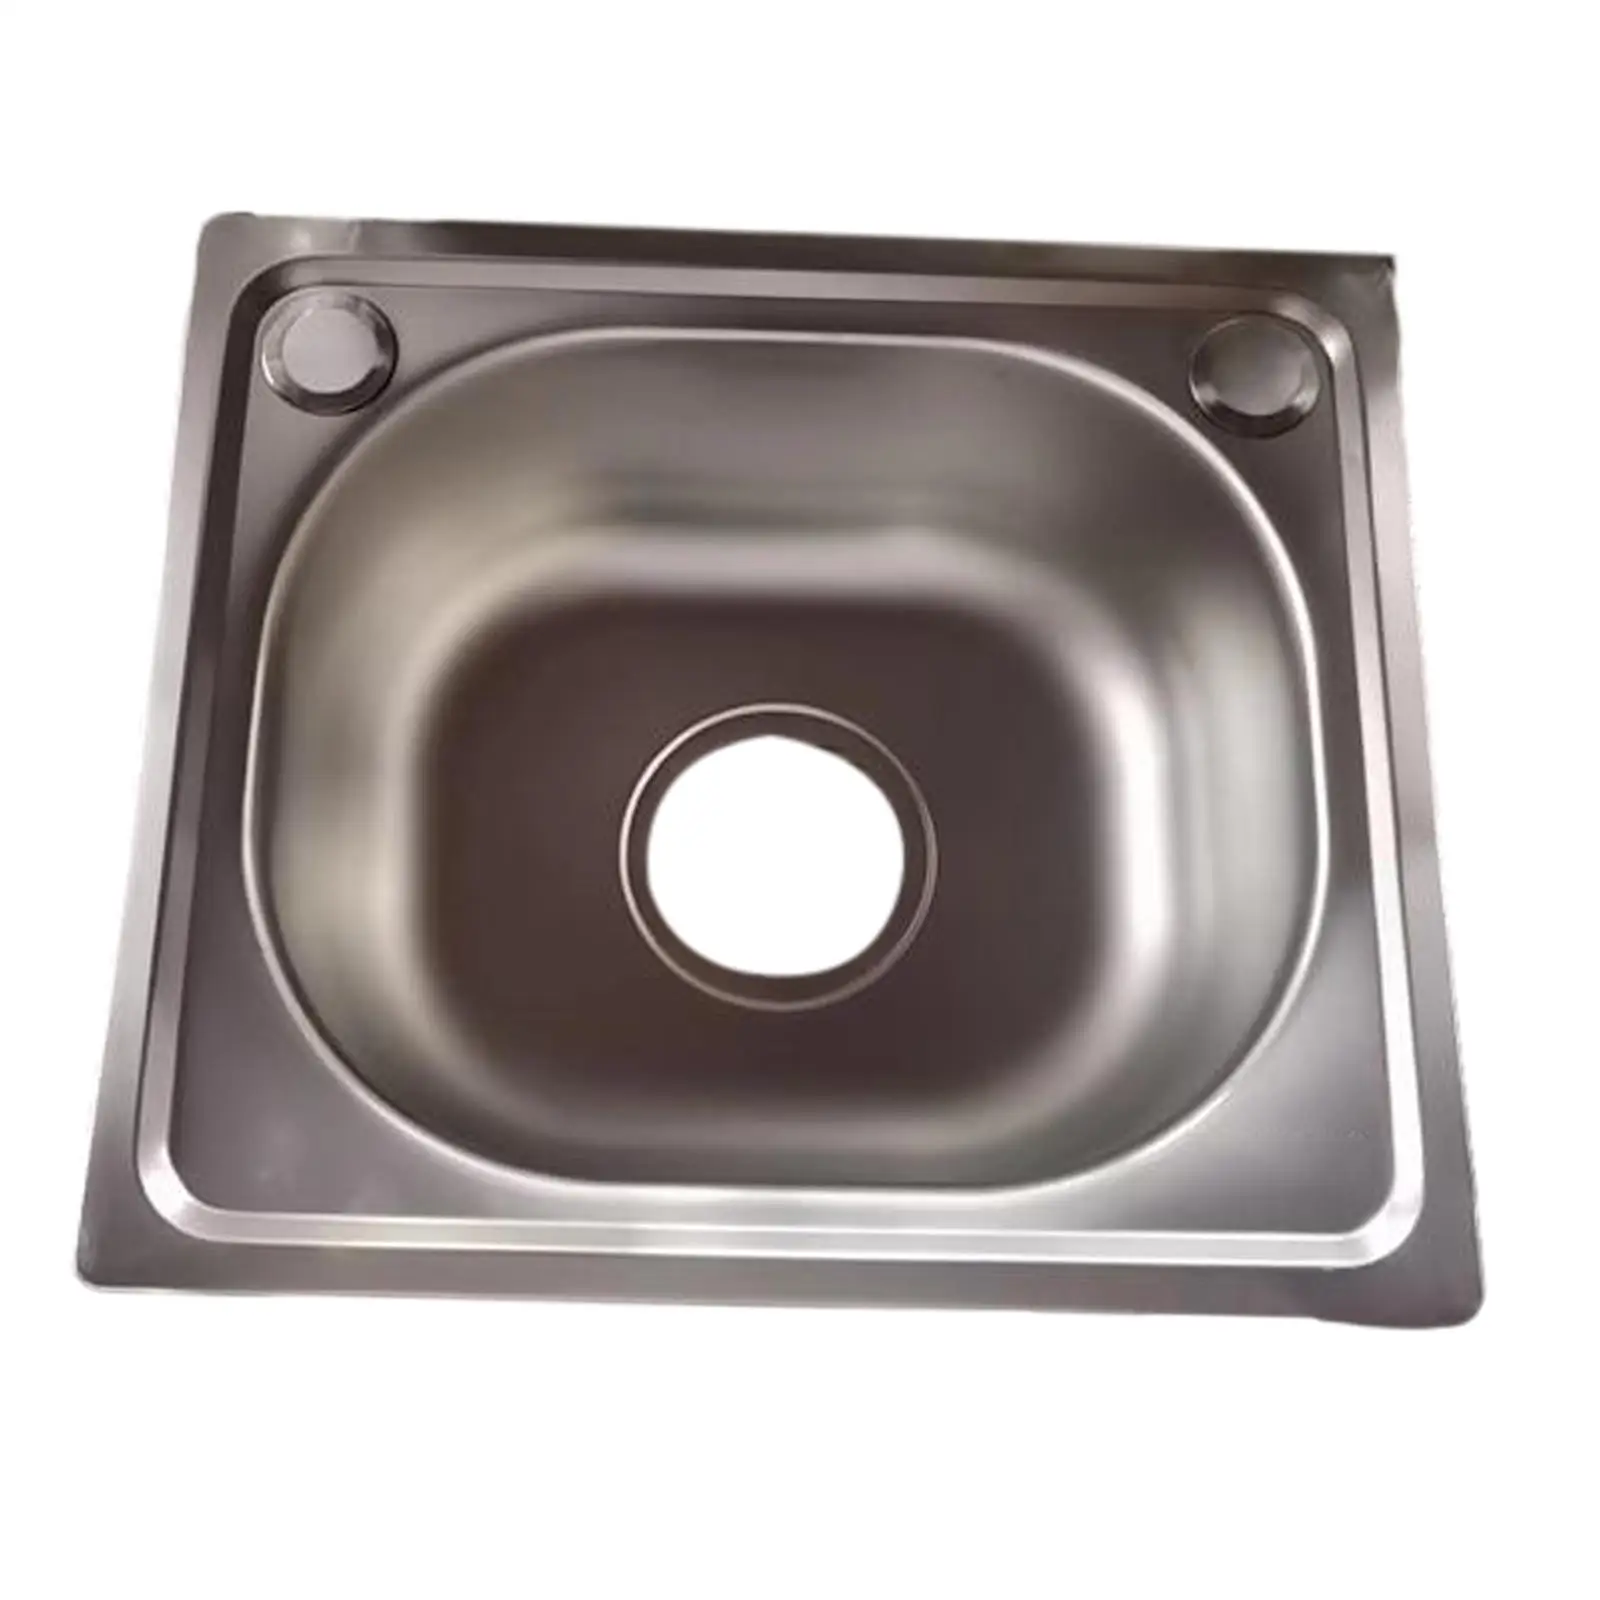 Stainless Steel Kitchen Sink Quickly Drainage Design 37cmx32cm Drop in Bar Sinks